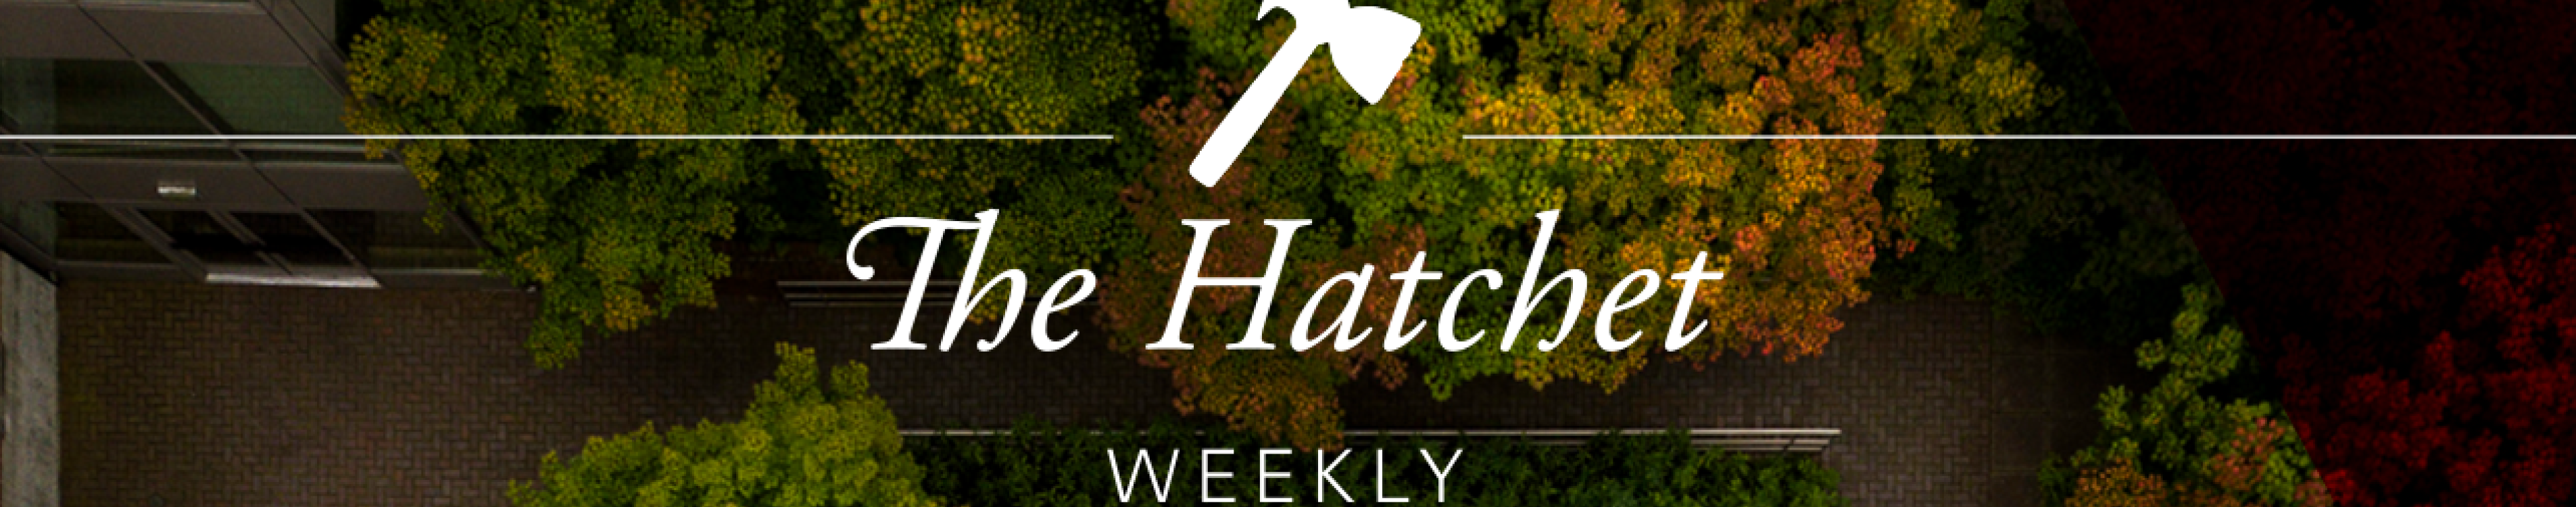 University of Puget Sound The Hatchet Newsletter header